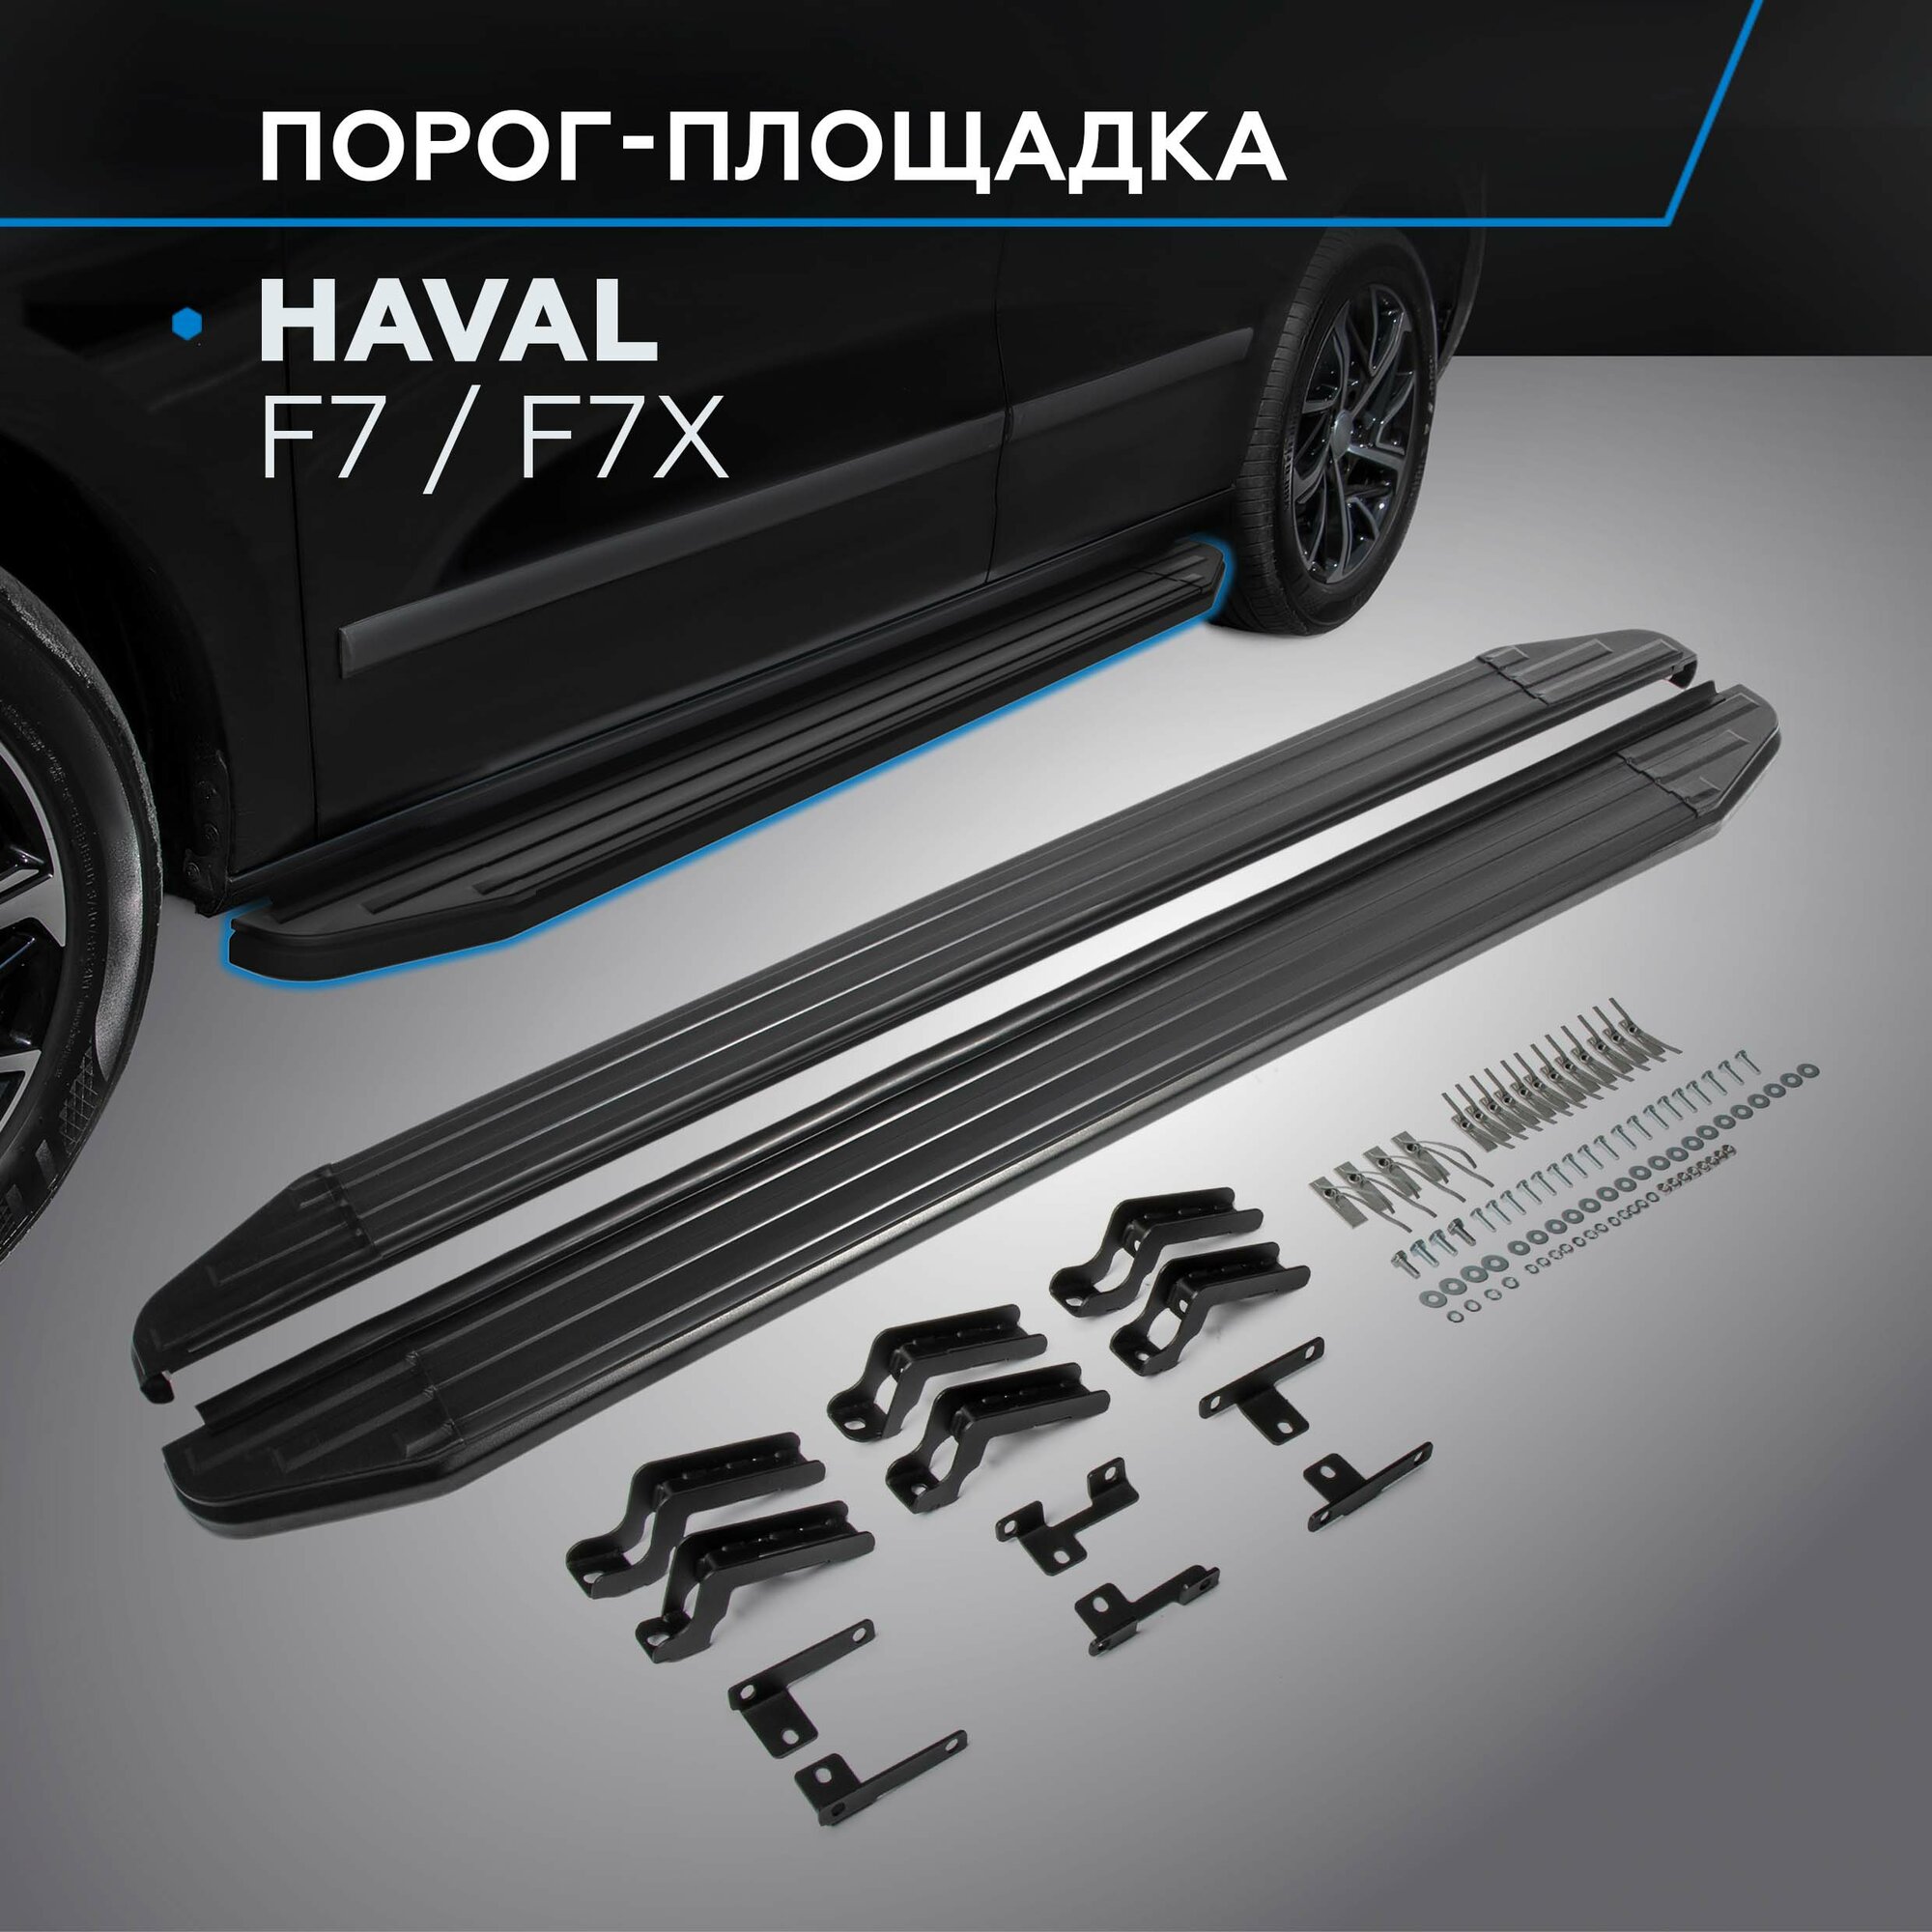 Пороги на автомобиль "Premium-Black" Rival для Haval F7 2019-2022 2022-н. в./F7x 2019-2022 2022-н. в 180 см 2 шт алюминий A180ALB.9403.1